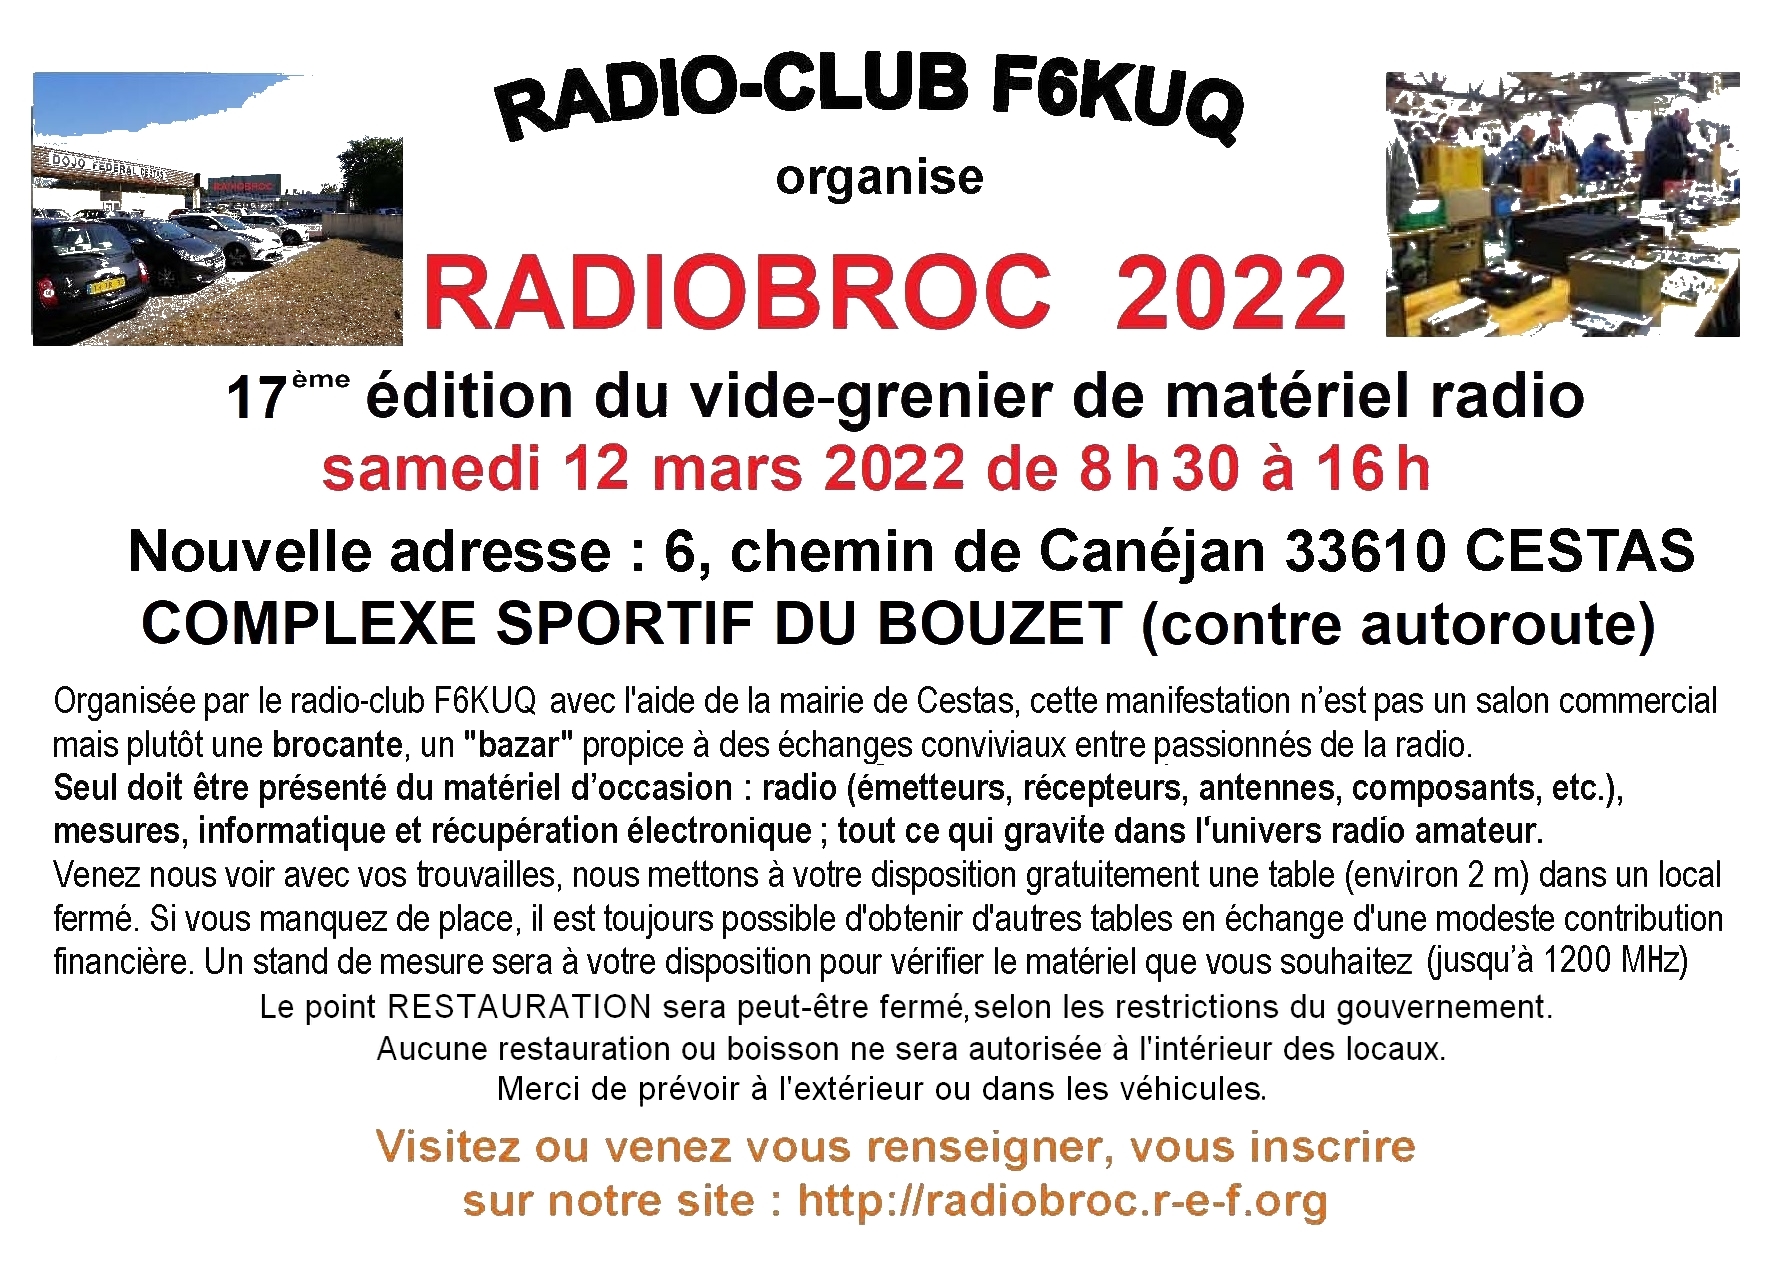 AFFICHE 2 RADIOBROC 2022 -rectifié2